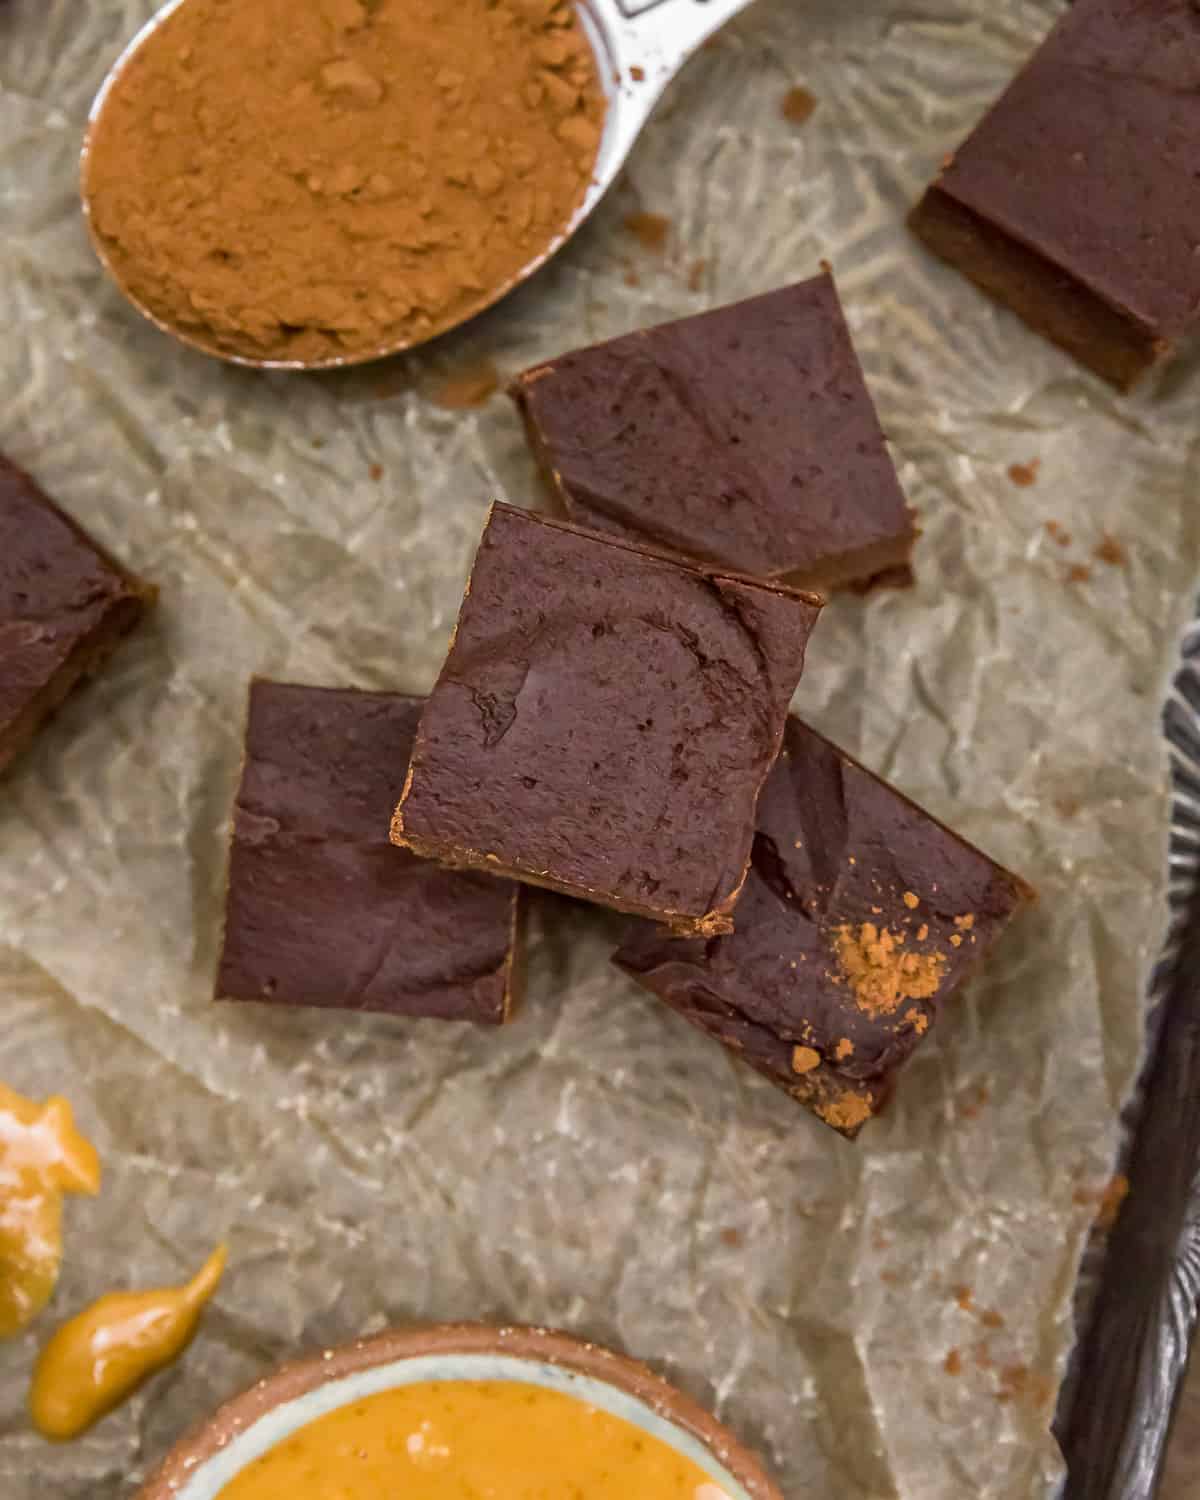 Pieces of Vegan Chocolate Peanut Butter Fudge